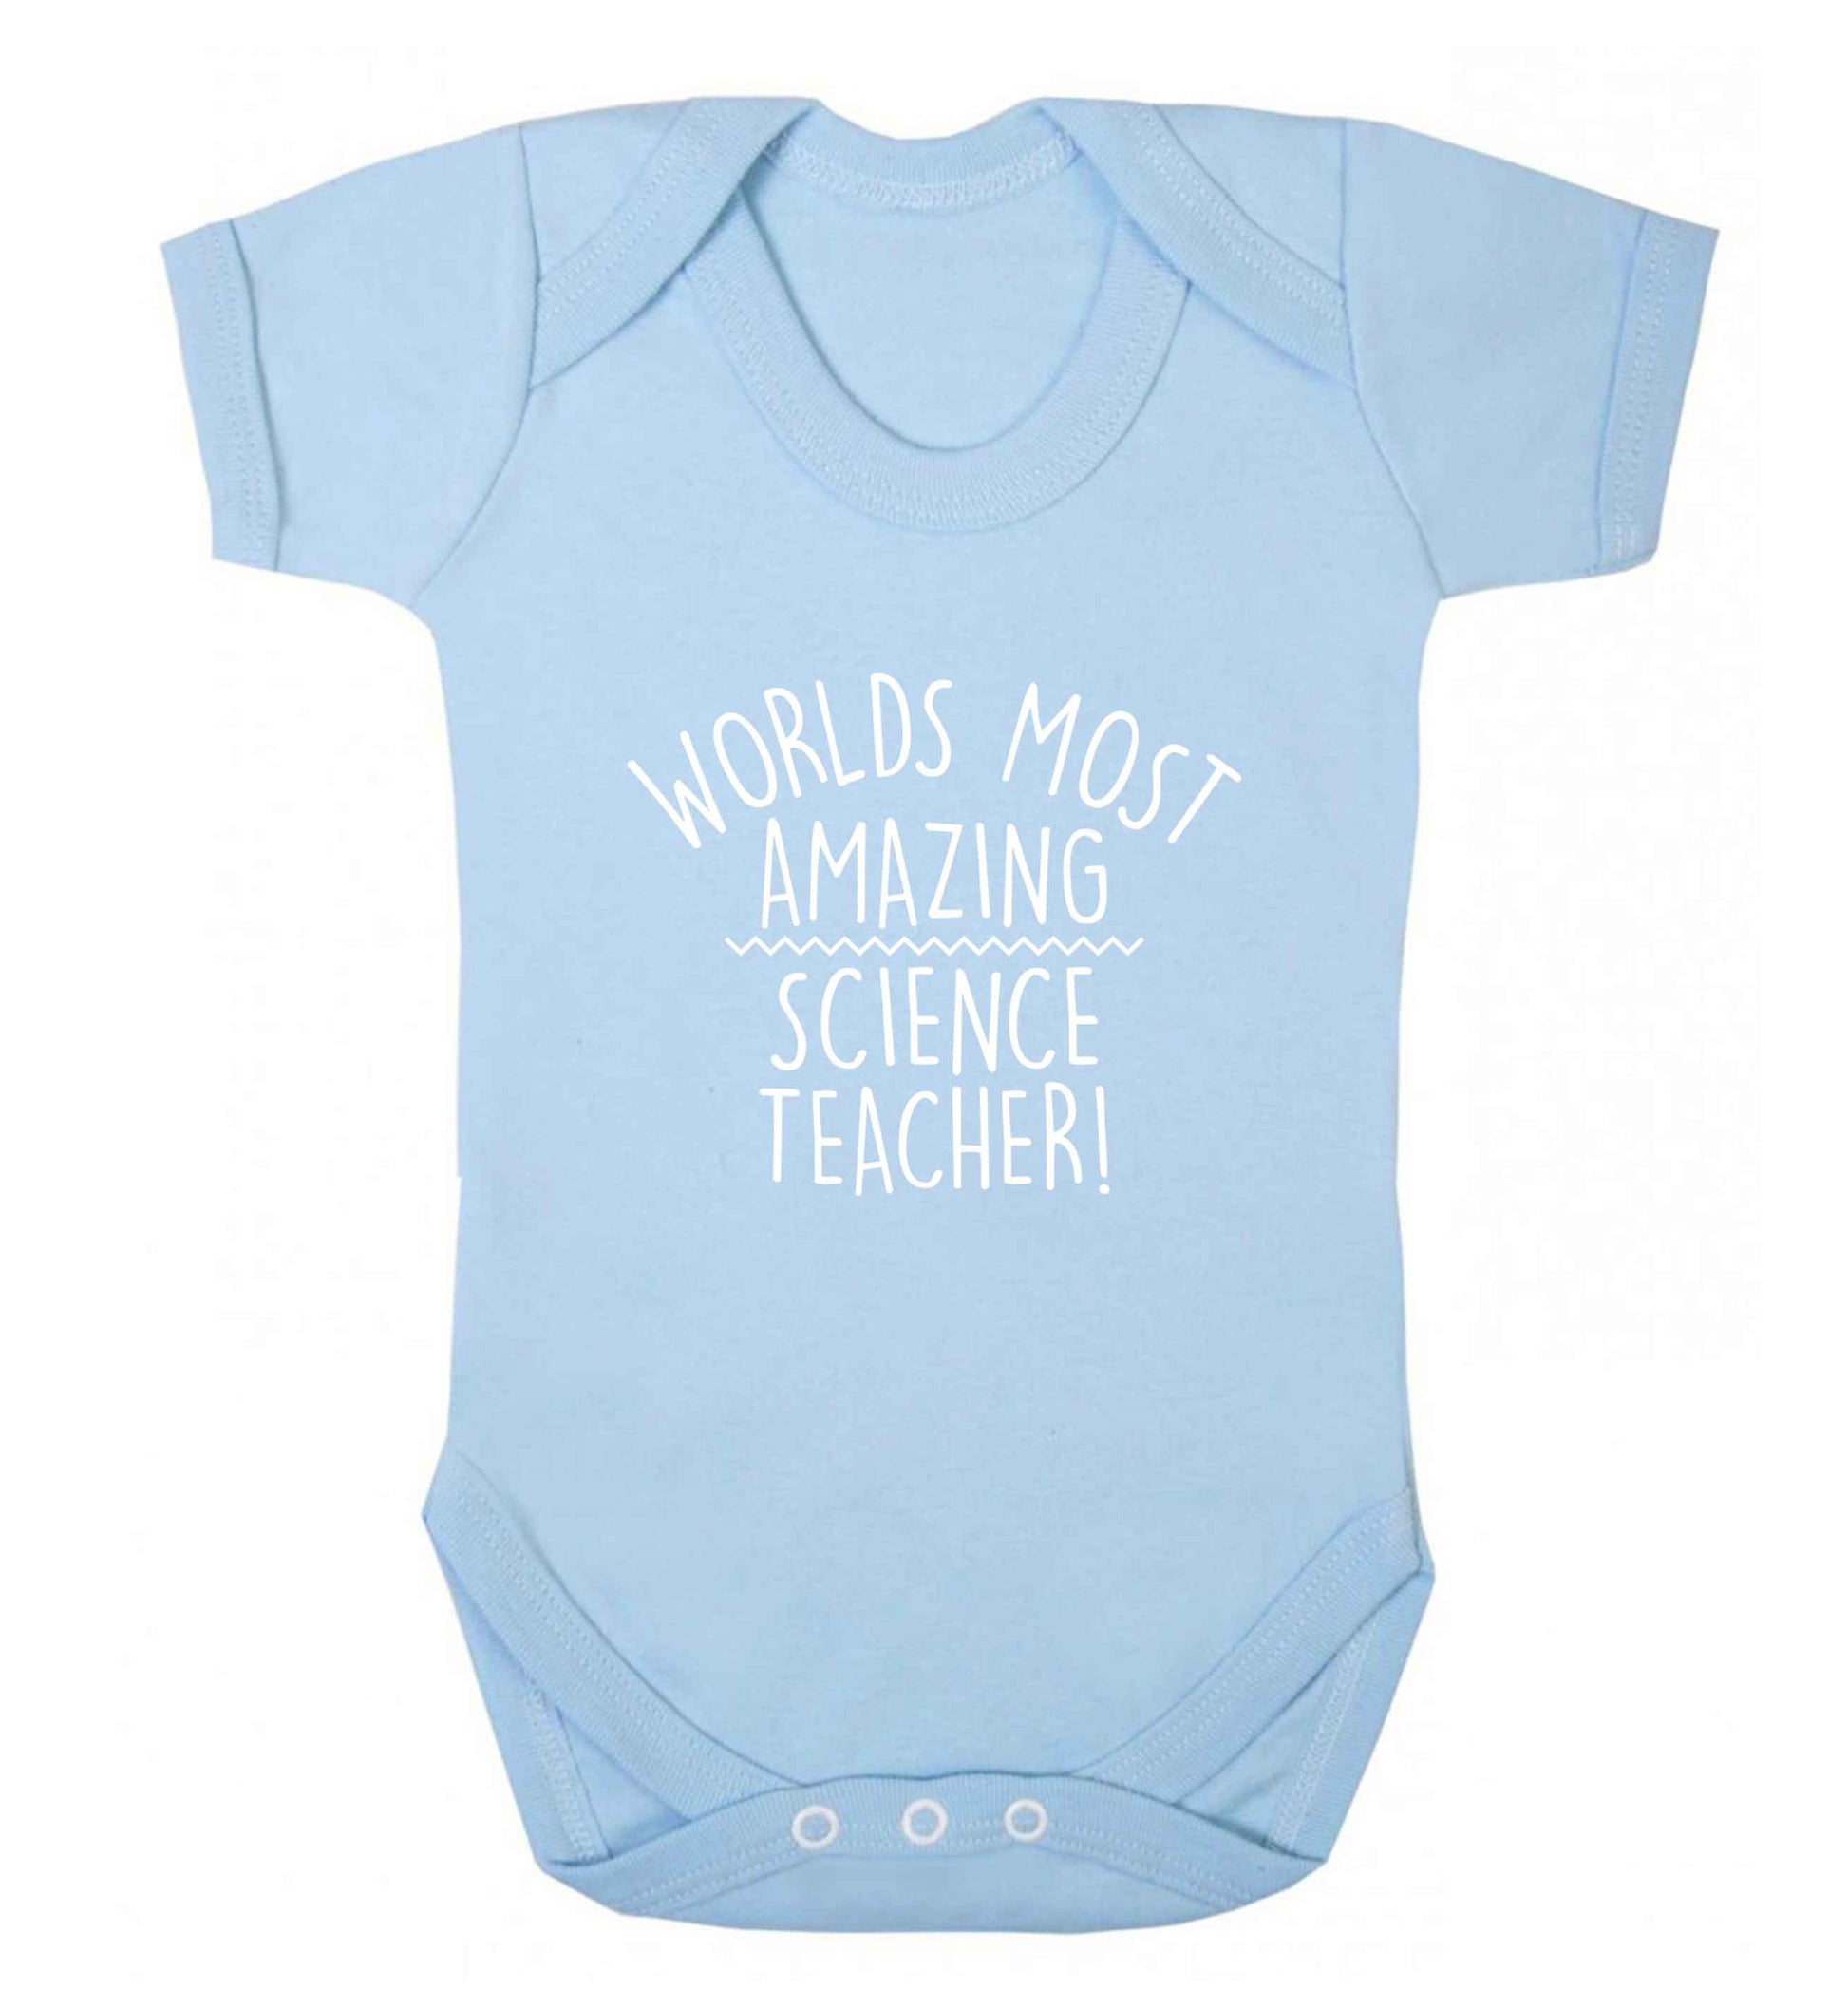 Worlds most amazing science teacher baby vest pale blue 18-24 months